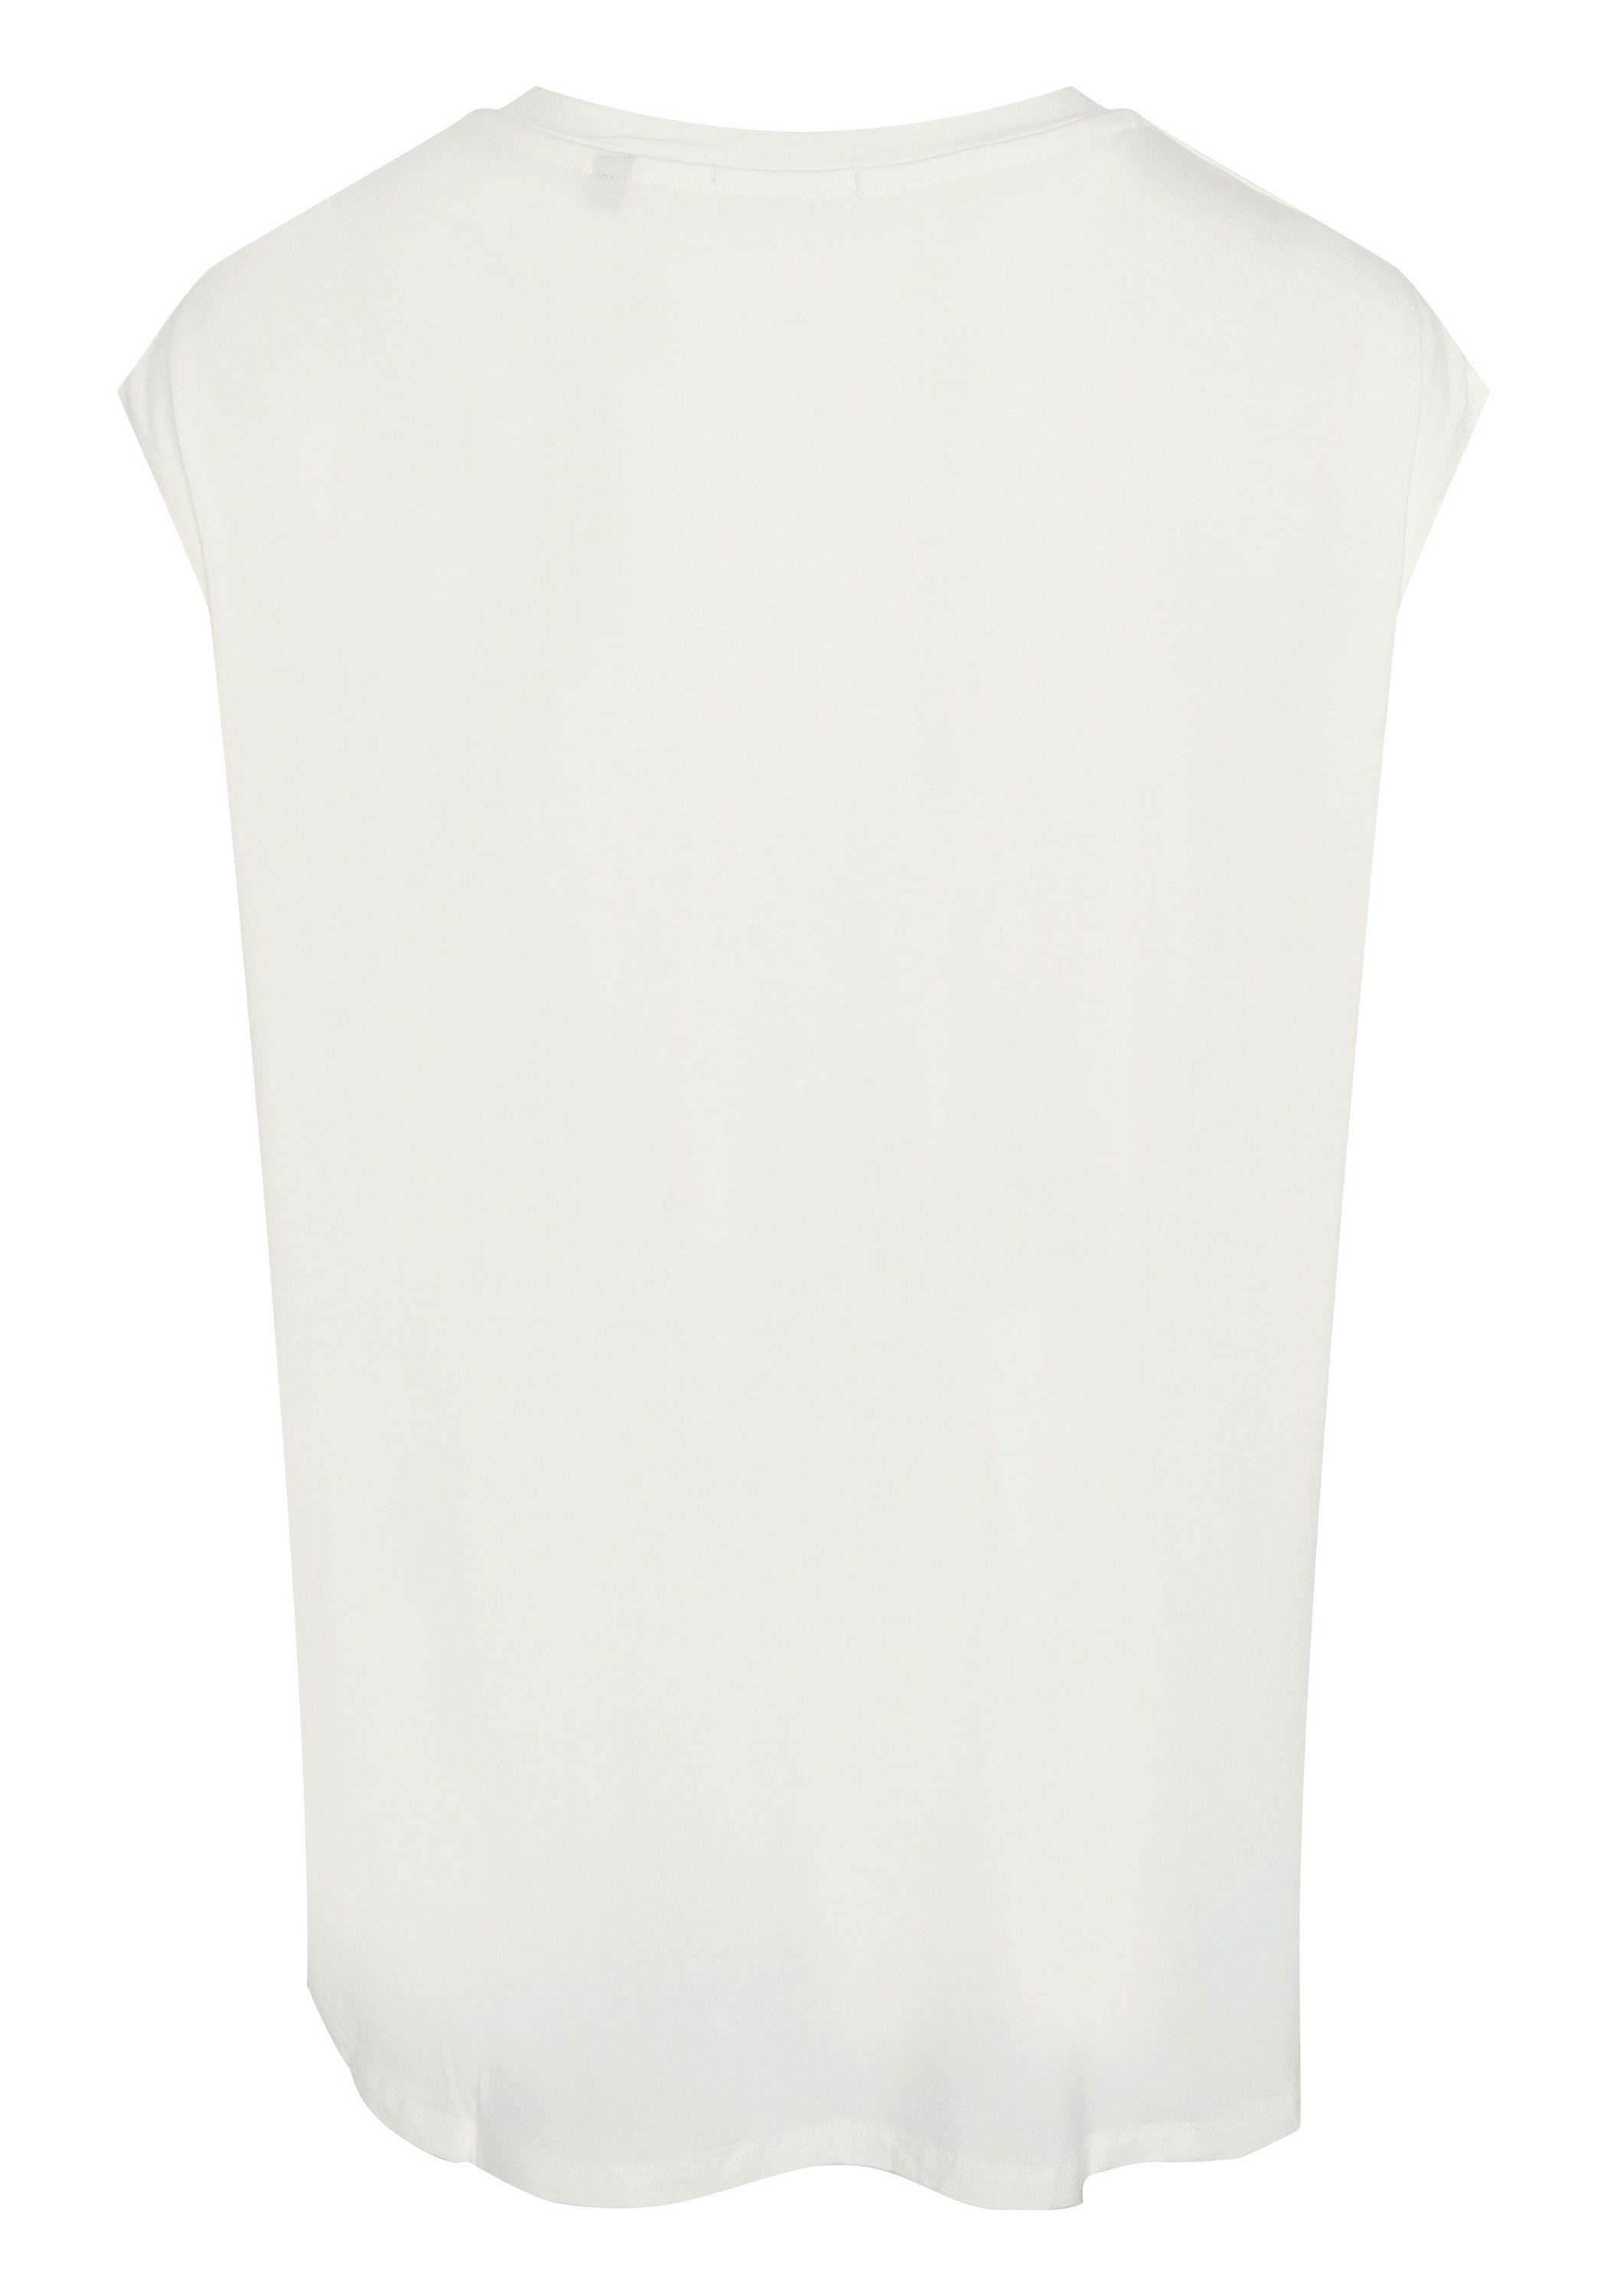 Star Print-Shirt aus Viskose-Elasthanmix mit Labelprint 1 Chiemsee White T-Shirt